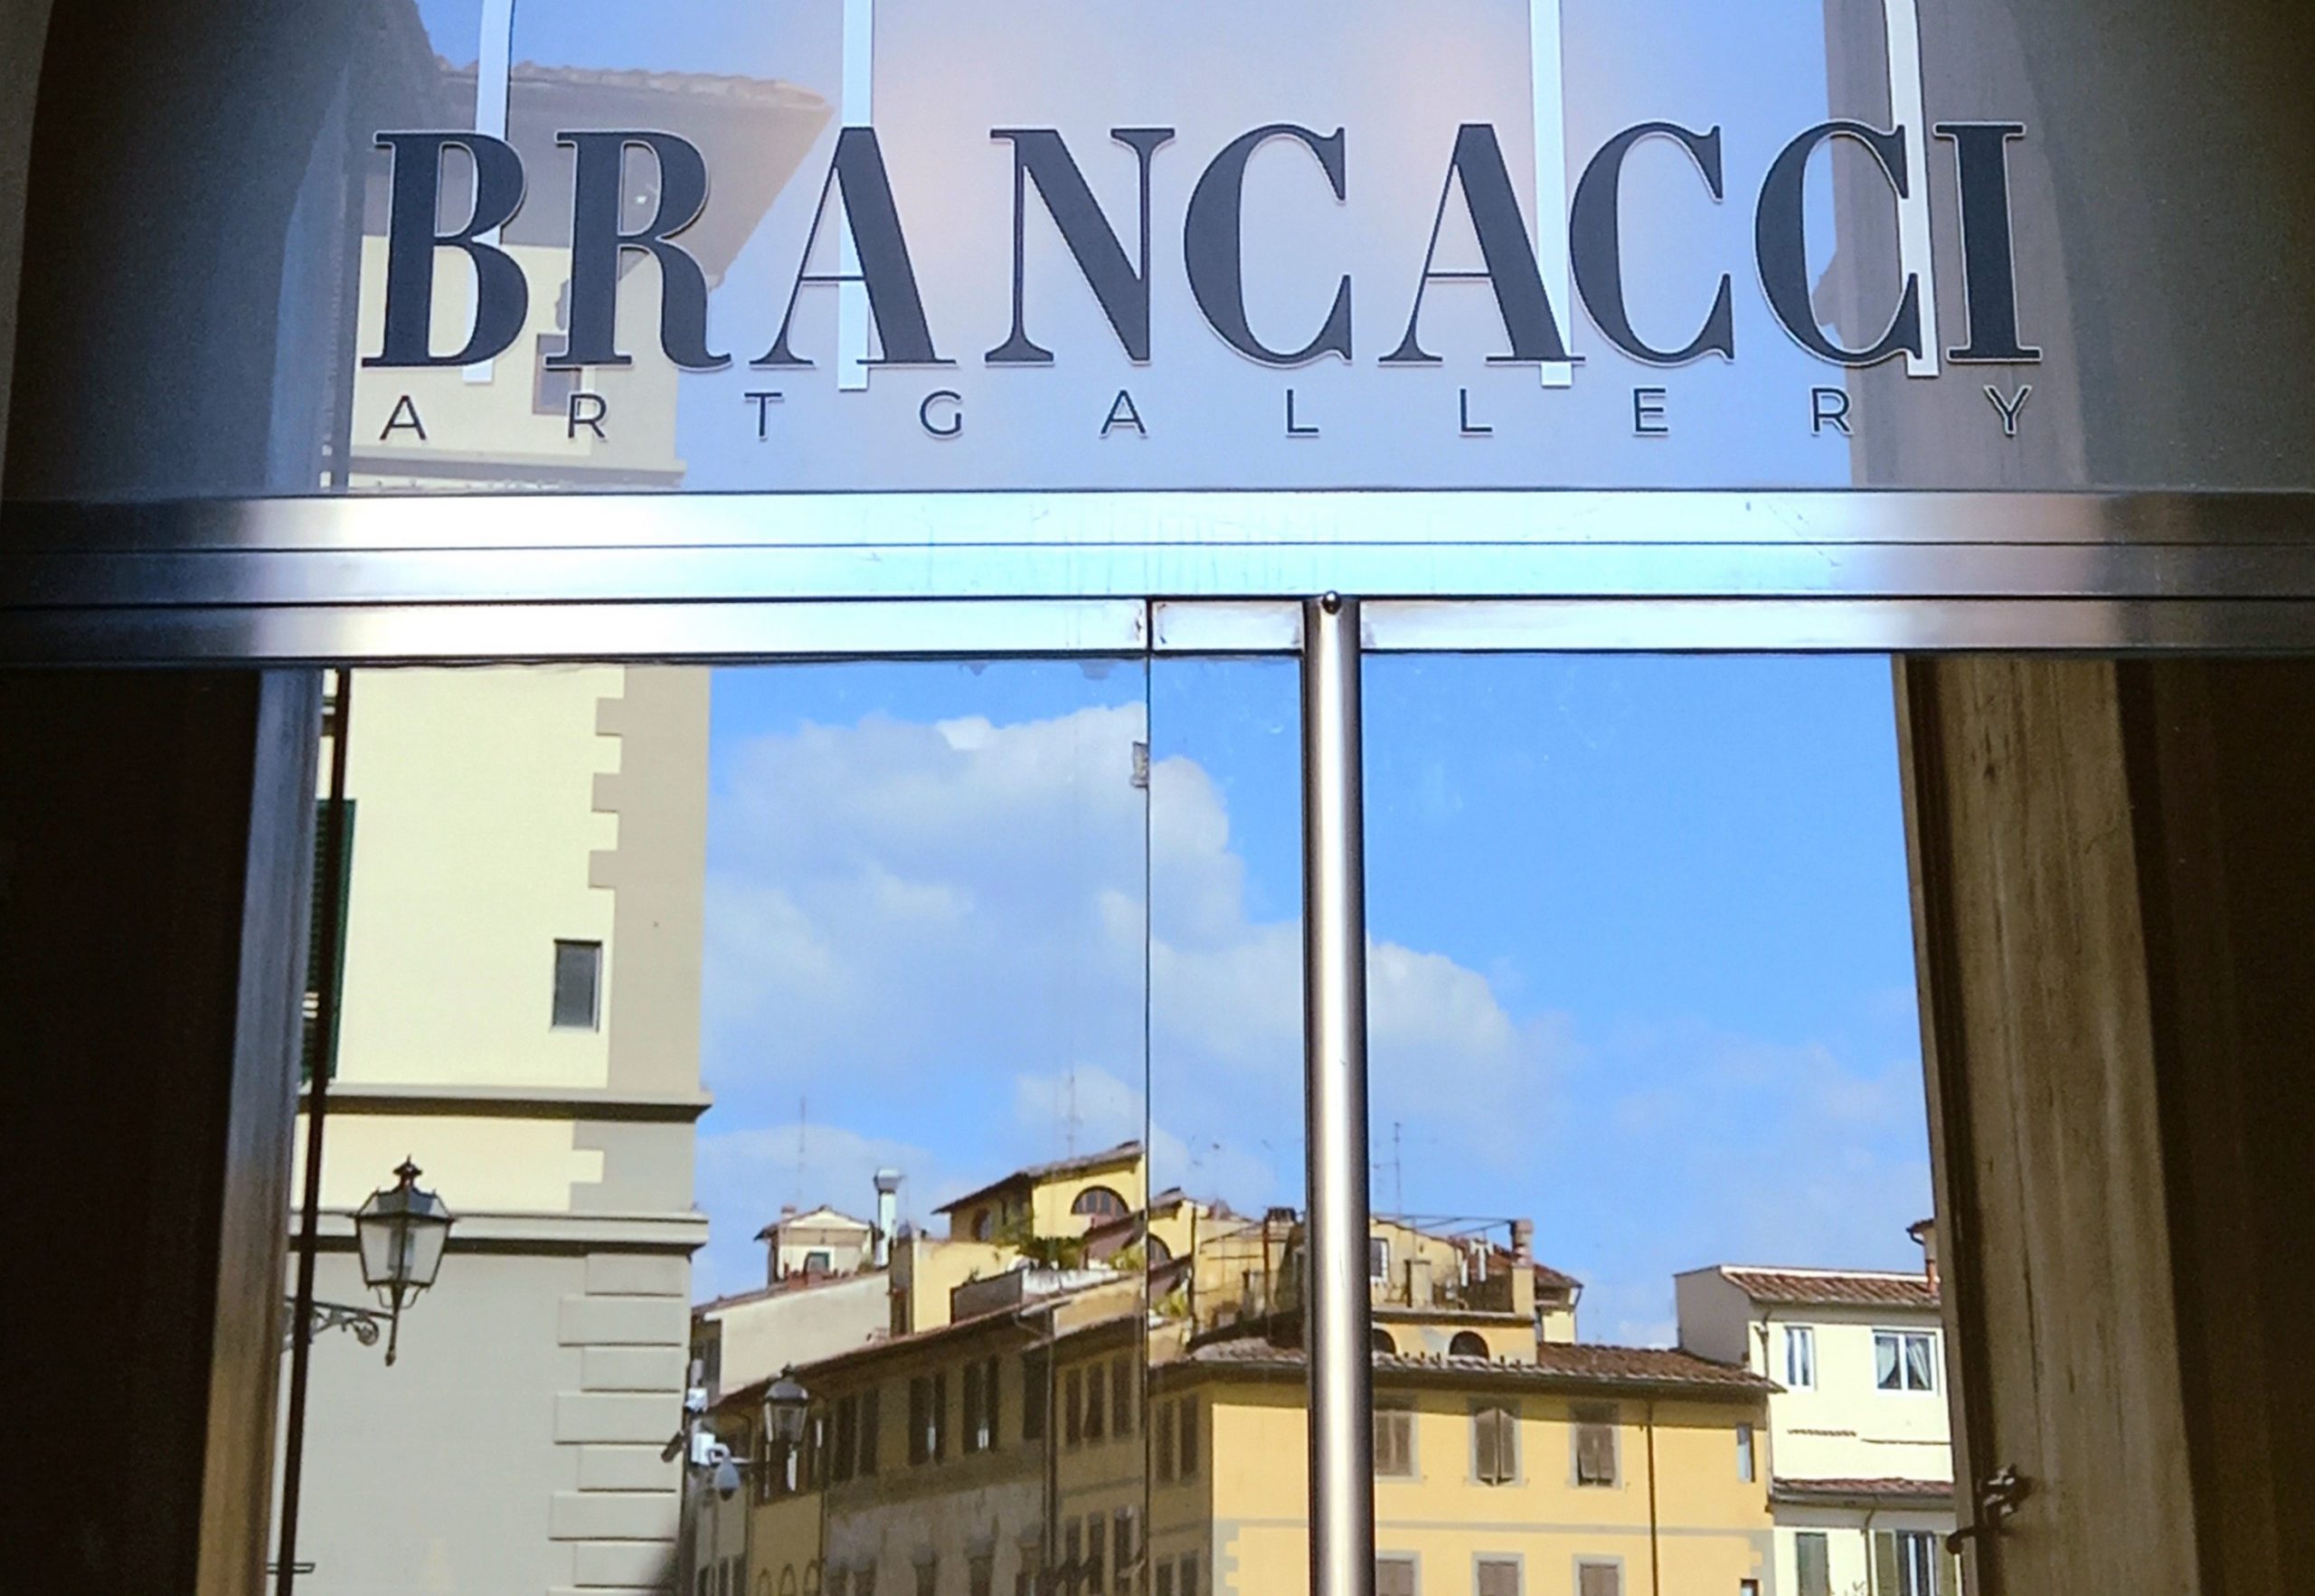 Brancacci-Insegna-scaled.jpg